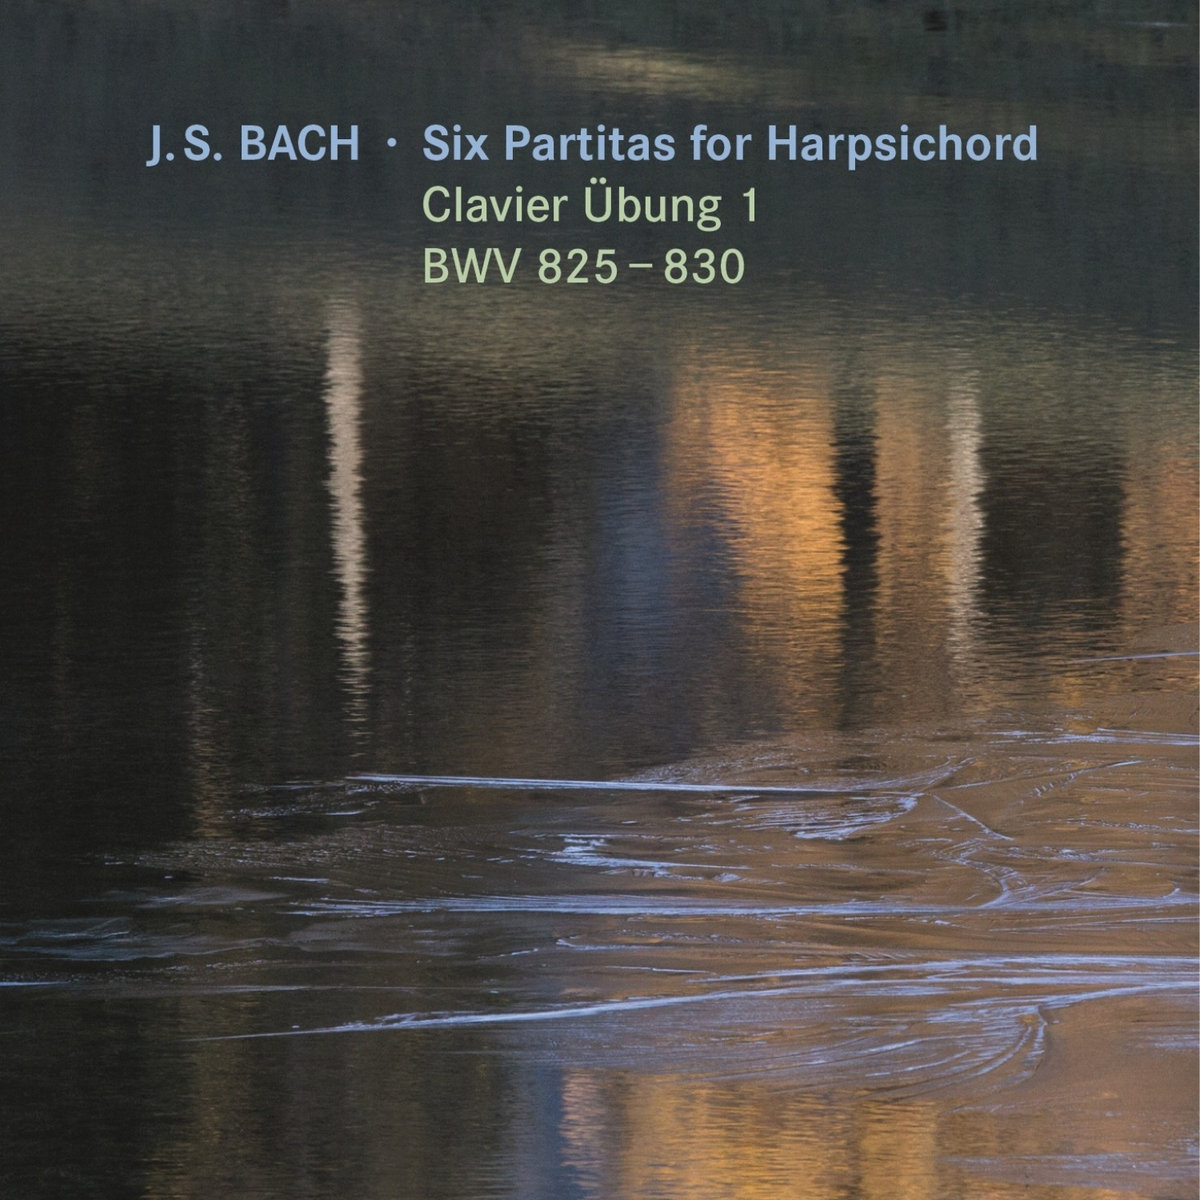 Six Partitas for Harpsichord